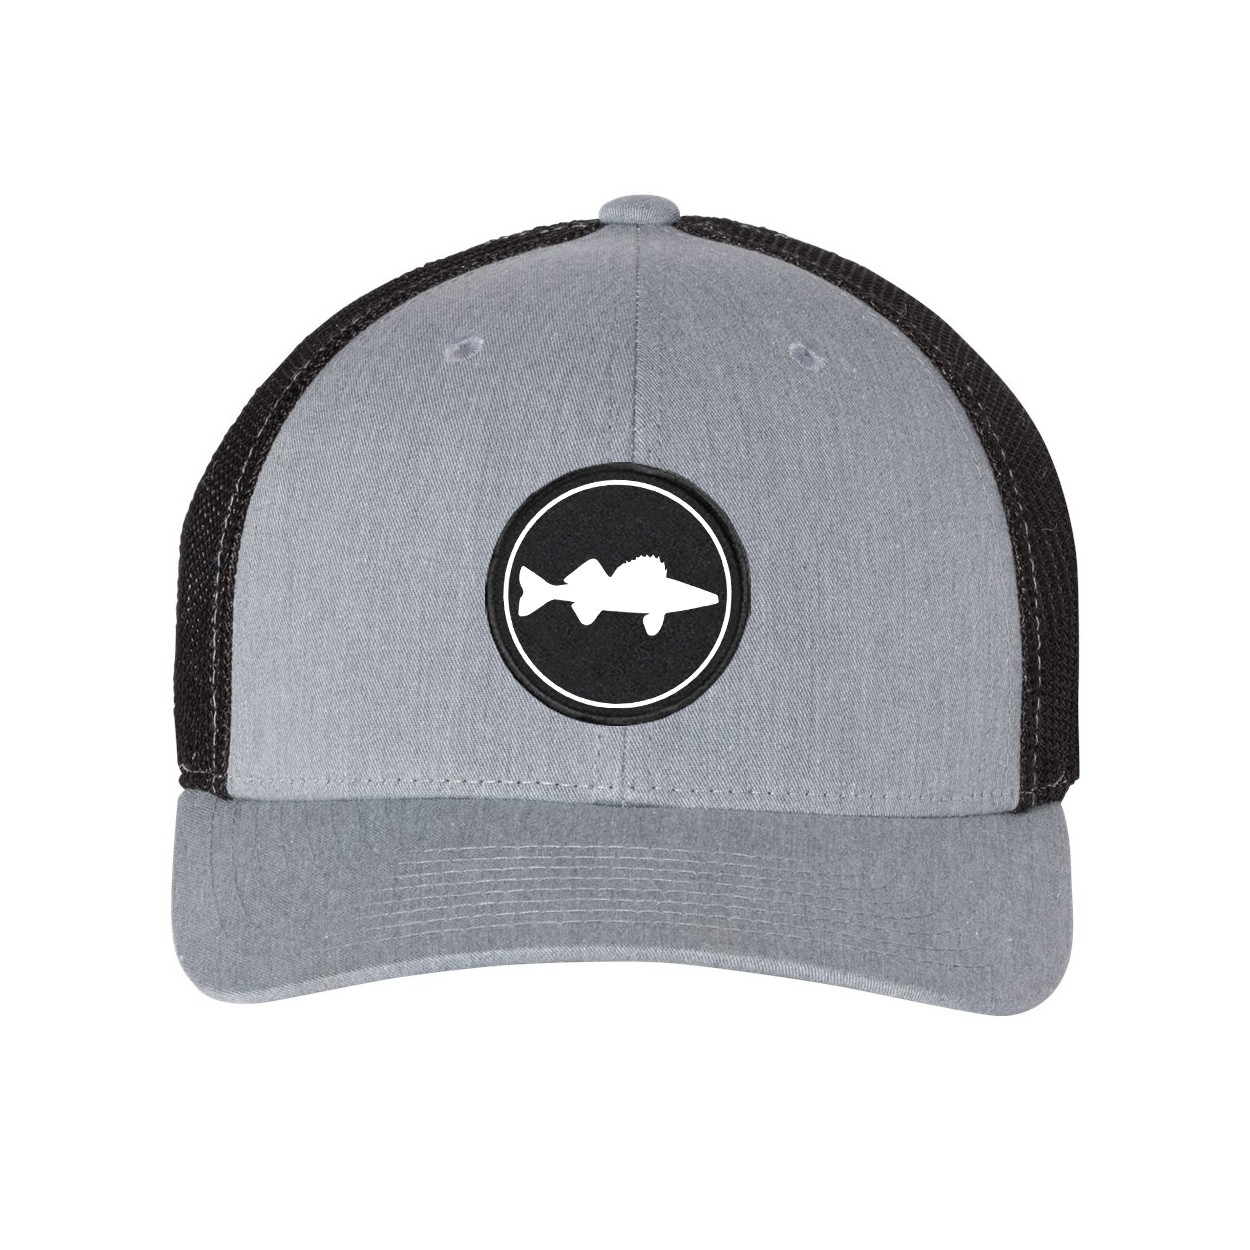 Trucker Hats W/ Fish Logo